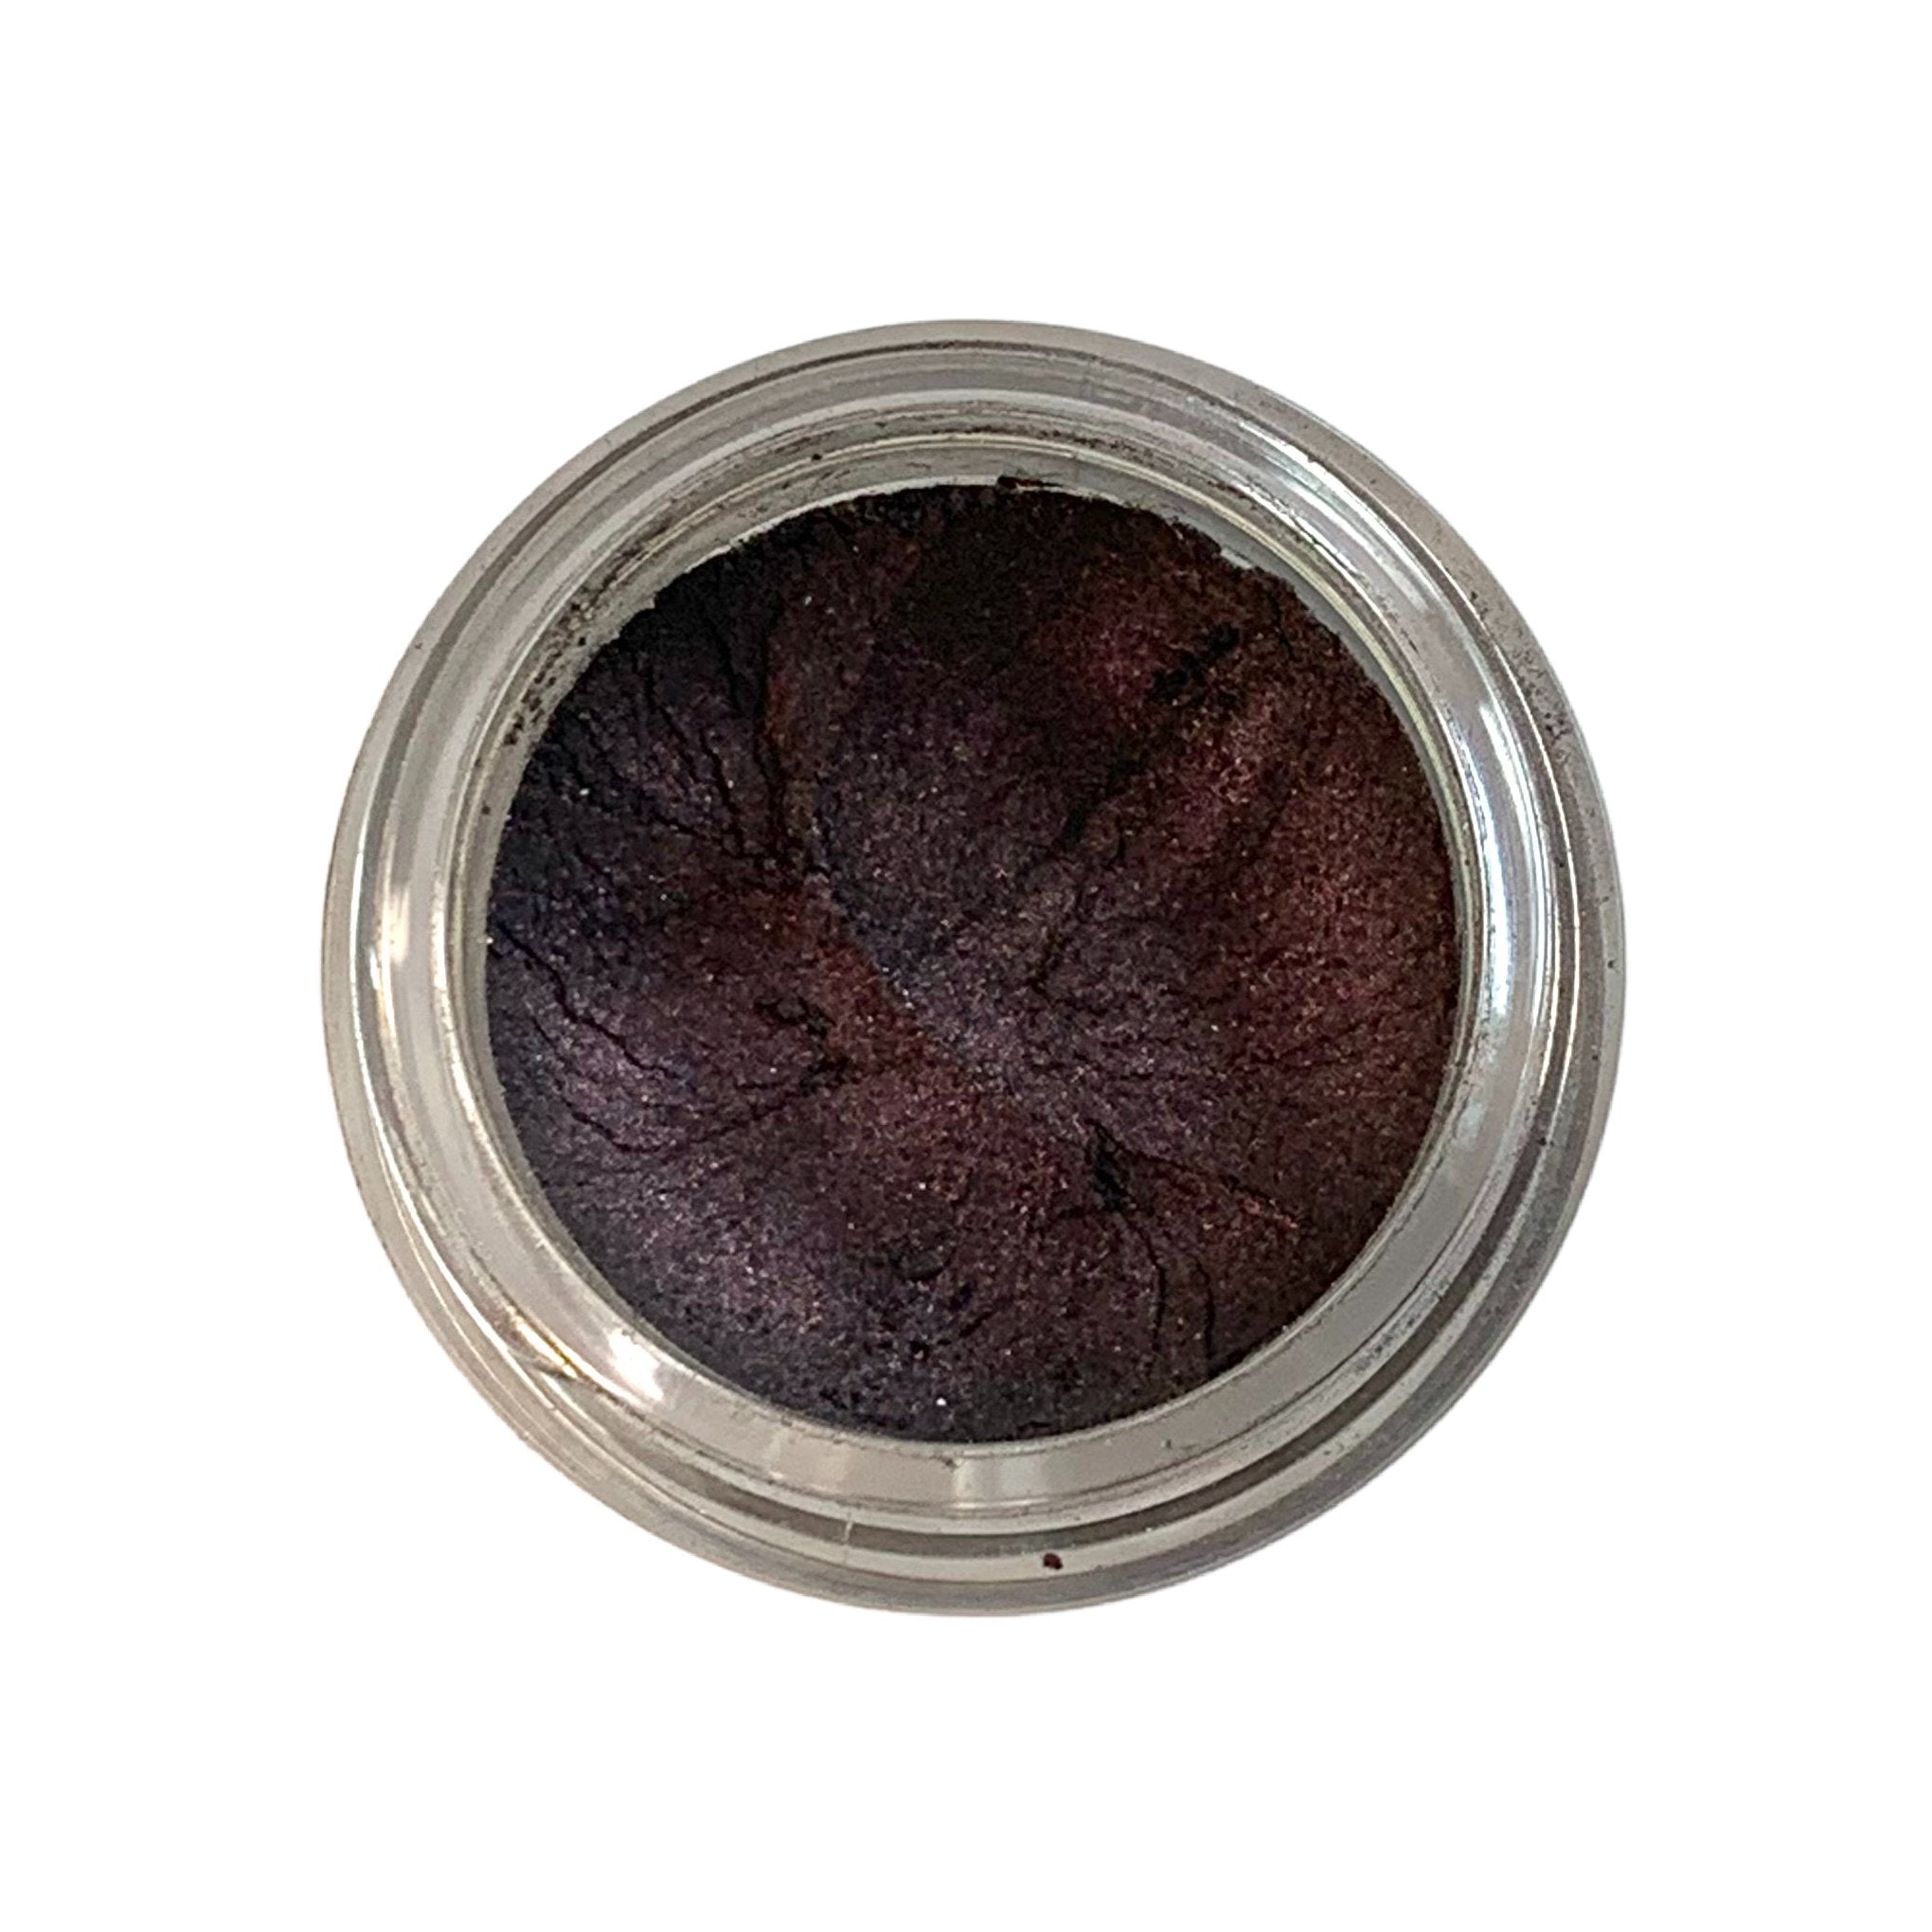 tempest - dark sparkly deep purple loose mineral eyeshadow. 10 gram sifter jar. vegan and cruelty free